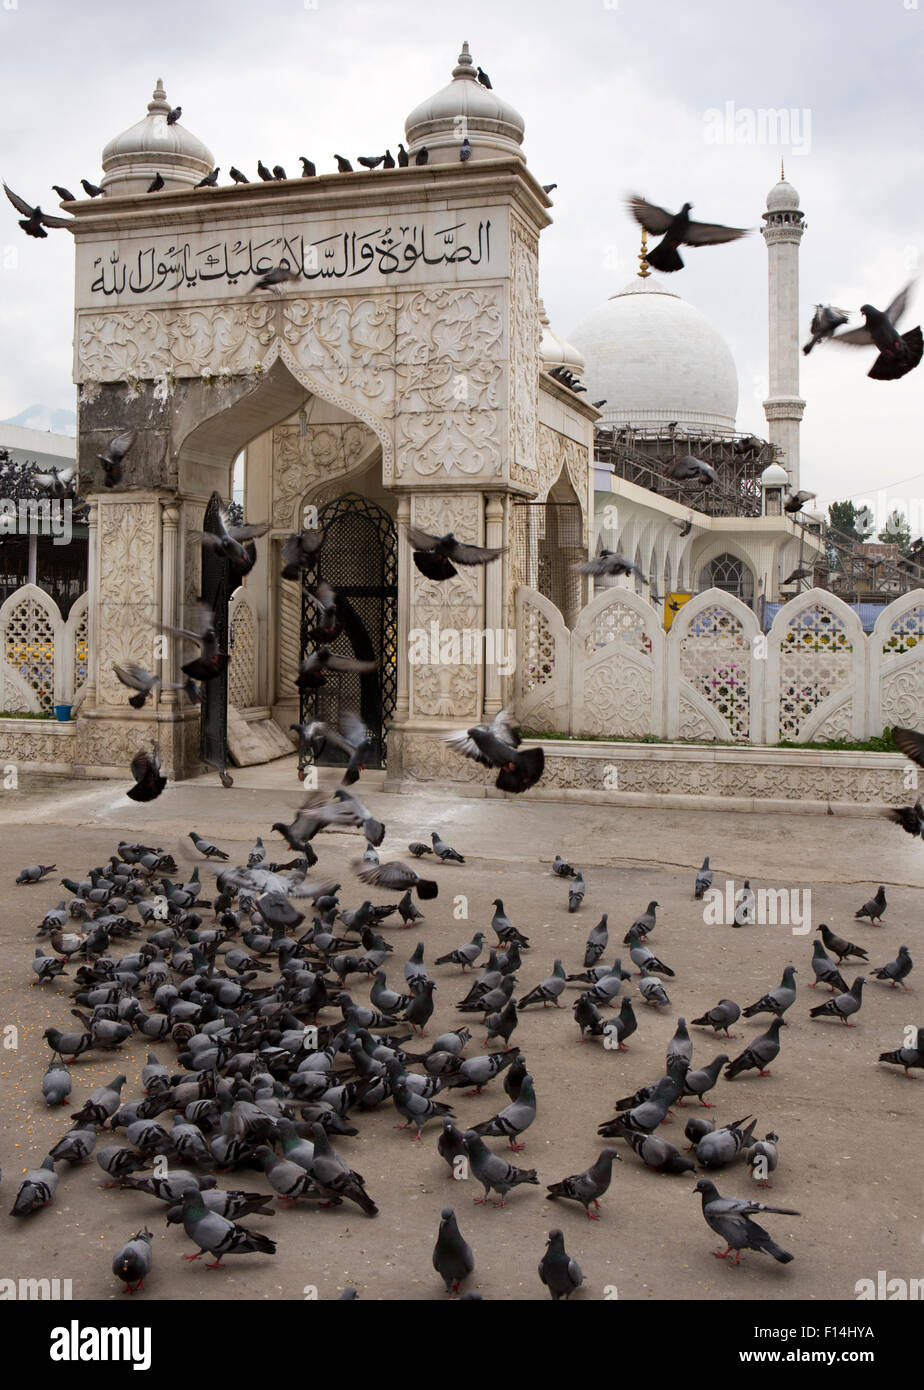 India, Jammu & Kashmir, Srinagar, Hazratbal, crowd of pigeons outside marble gate to Moslem shrine Stock Photo